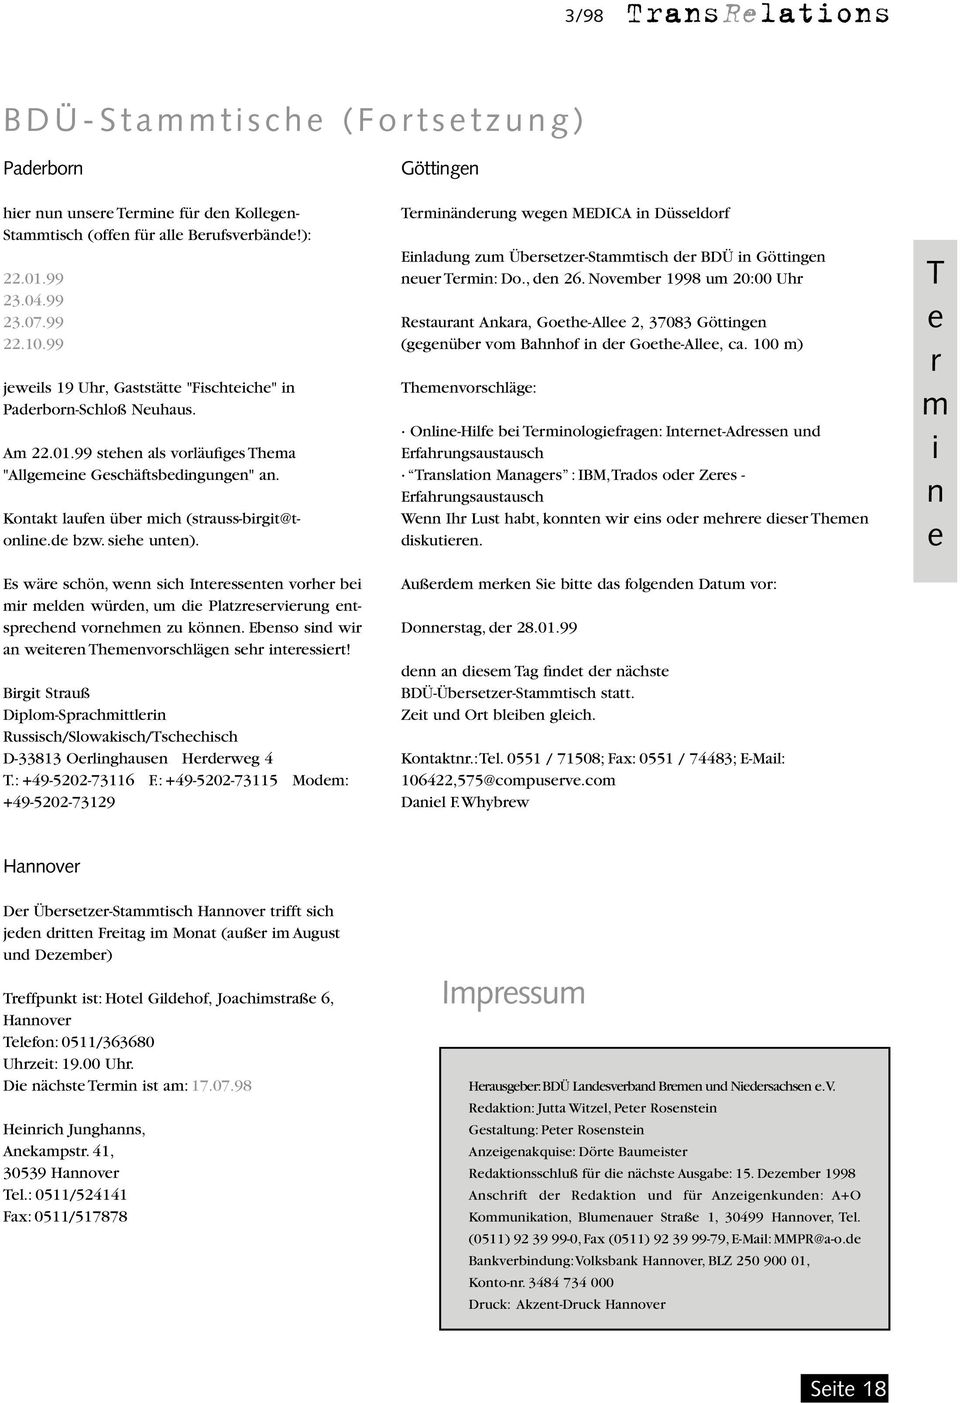 Bigi Sauß Diplom-Spachmilin Ruich/Slowakich/Tchchich D-33813 Olinghaun Hdwg 4 T.: +49-5202-73116 F.